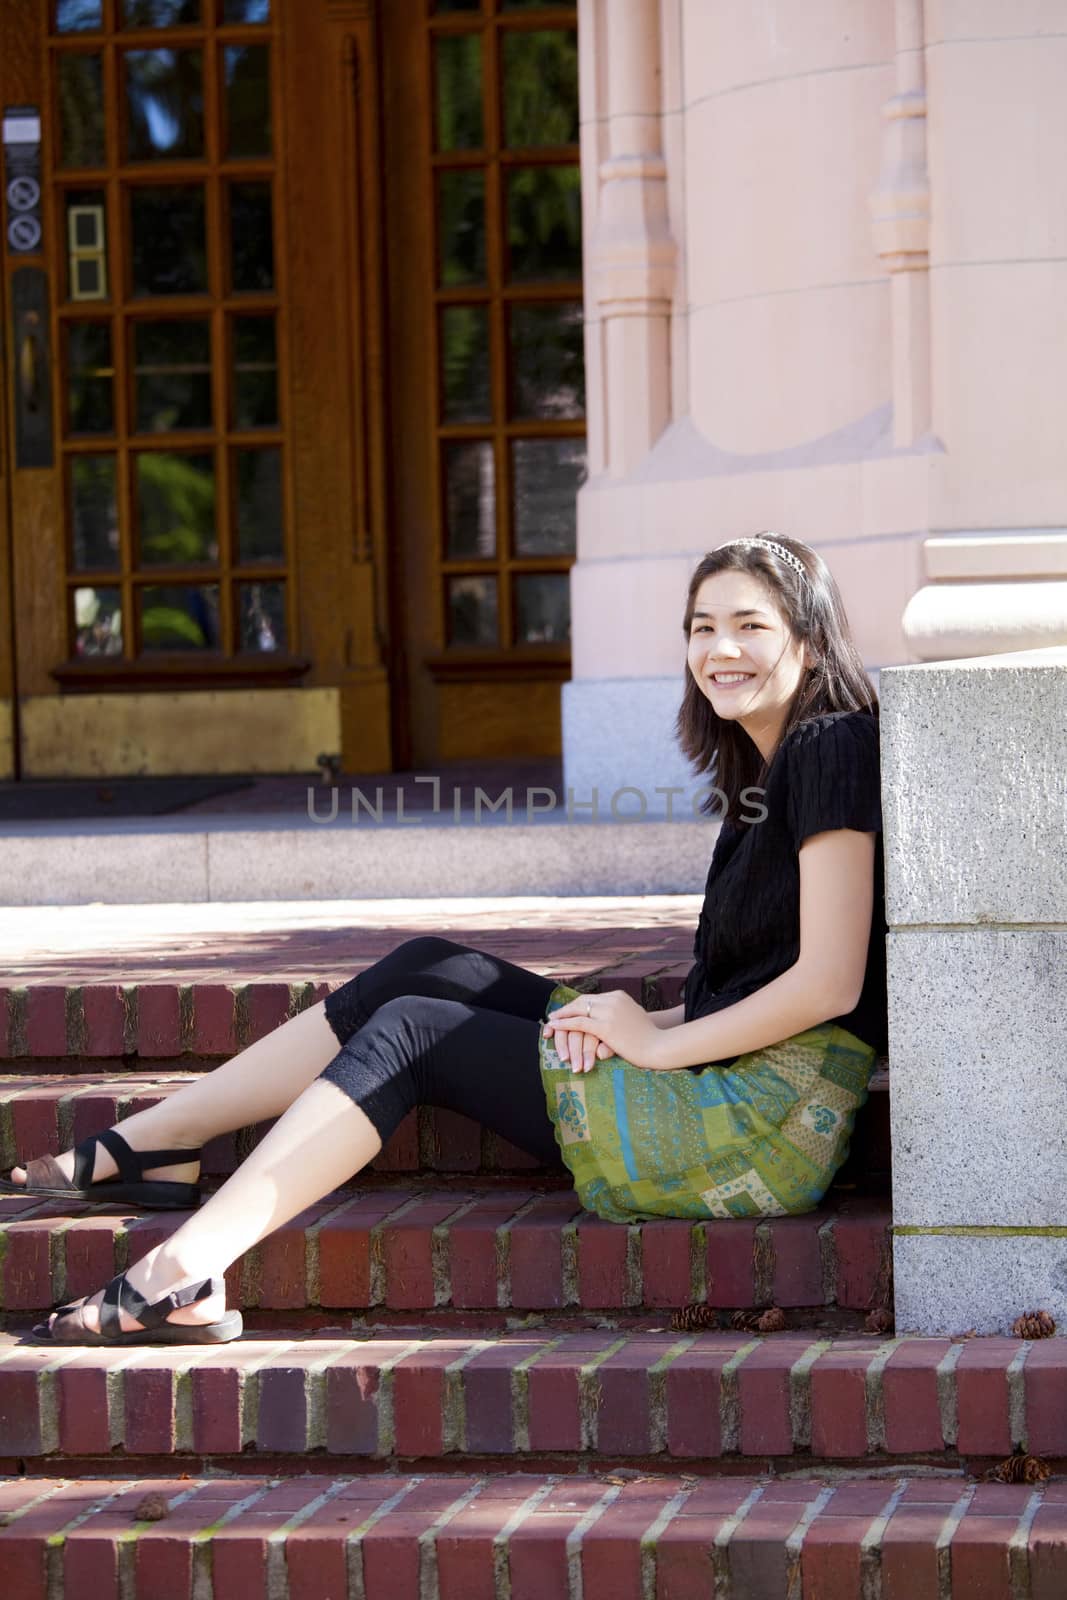 Young biracial teen girl sitting on brick steps outdoors, enjoying sunshine